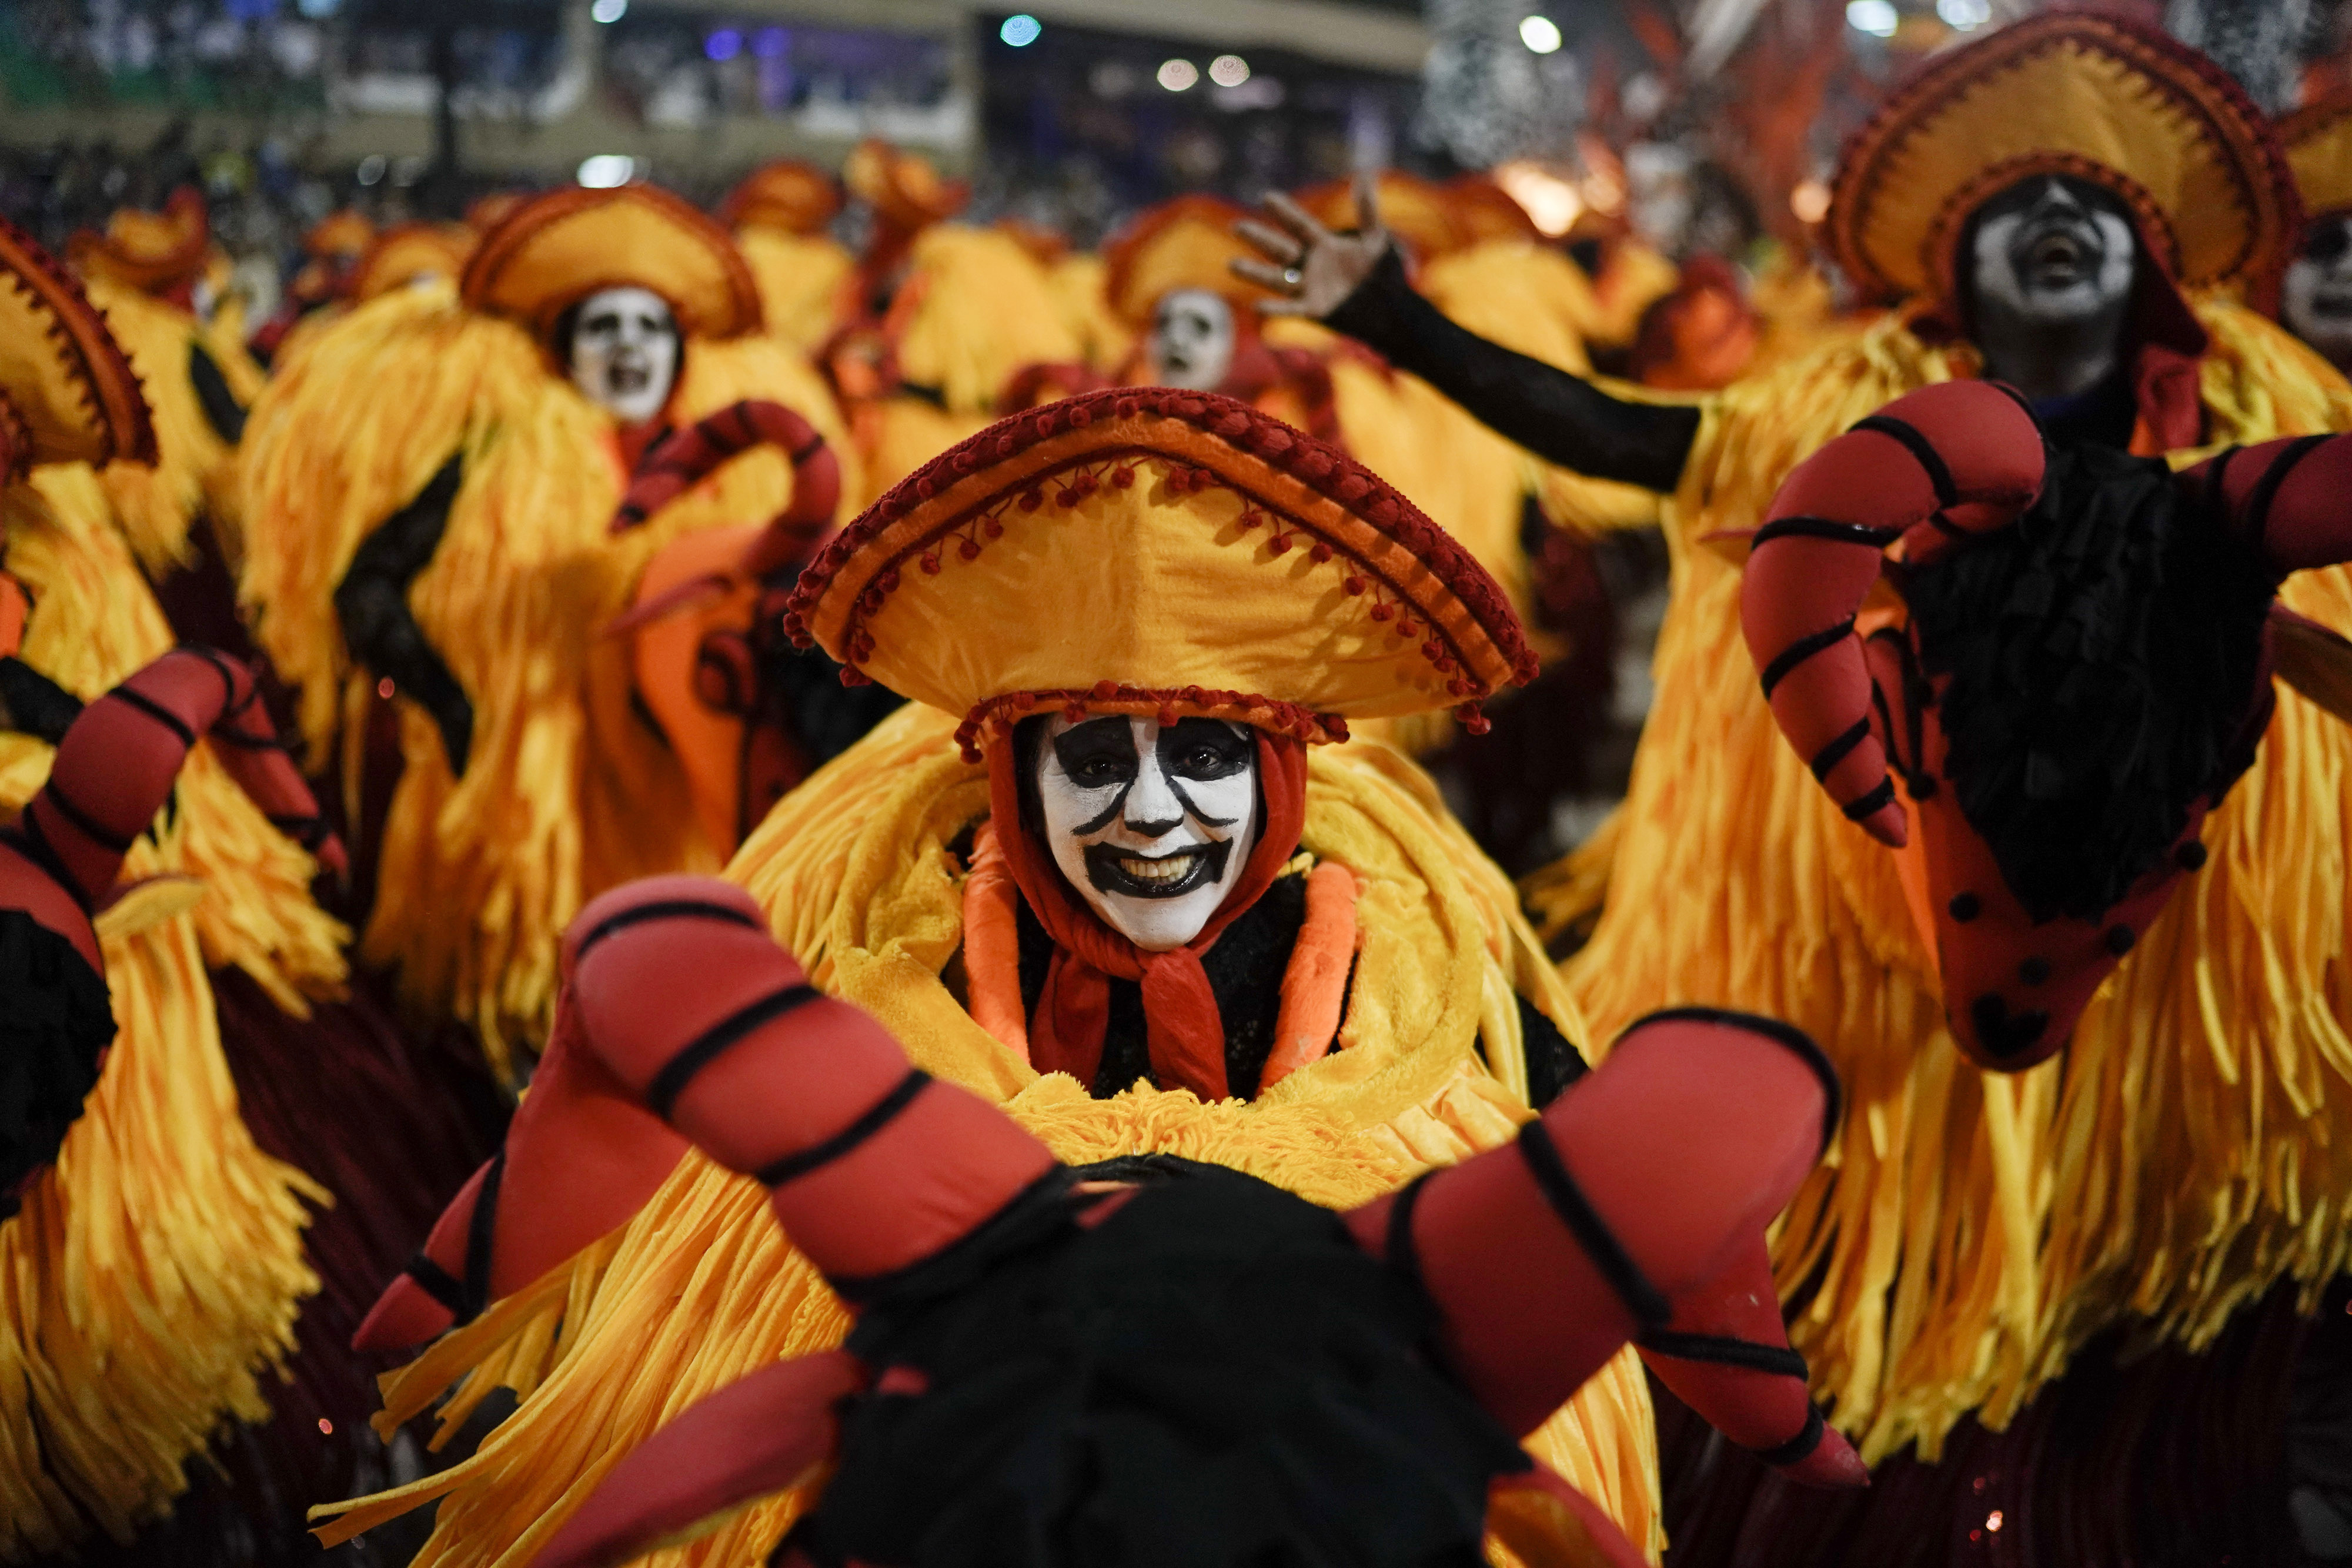 A performer from the Paraiso do Tuiuti samba school parades during Carnival celebrations at the Sambadrome in Rio de Janeiro, Brazil, Tuesday, March 5, 2019. (AP Photo/Leo Correa)